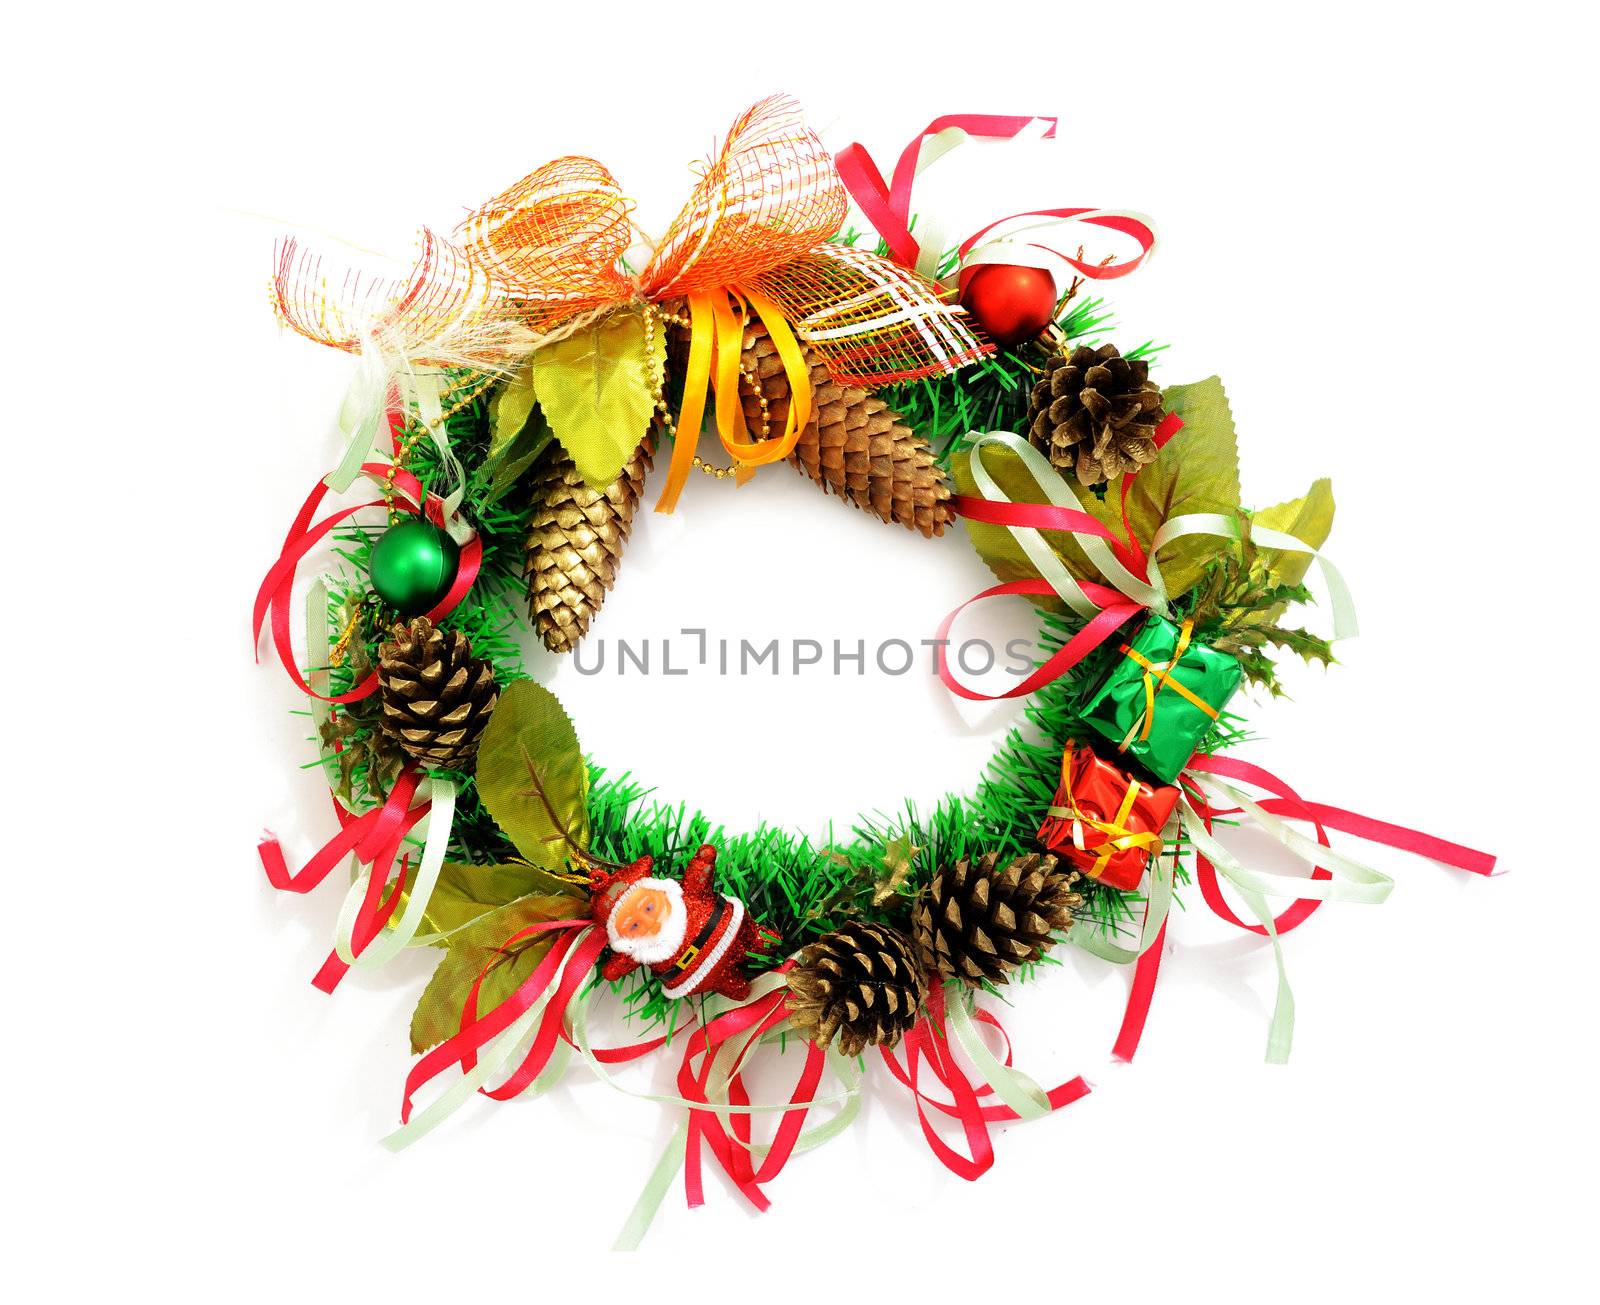 Christmas wreath on white background by velkol